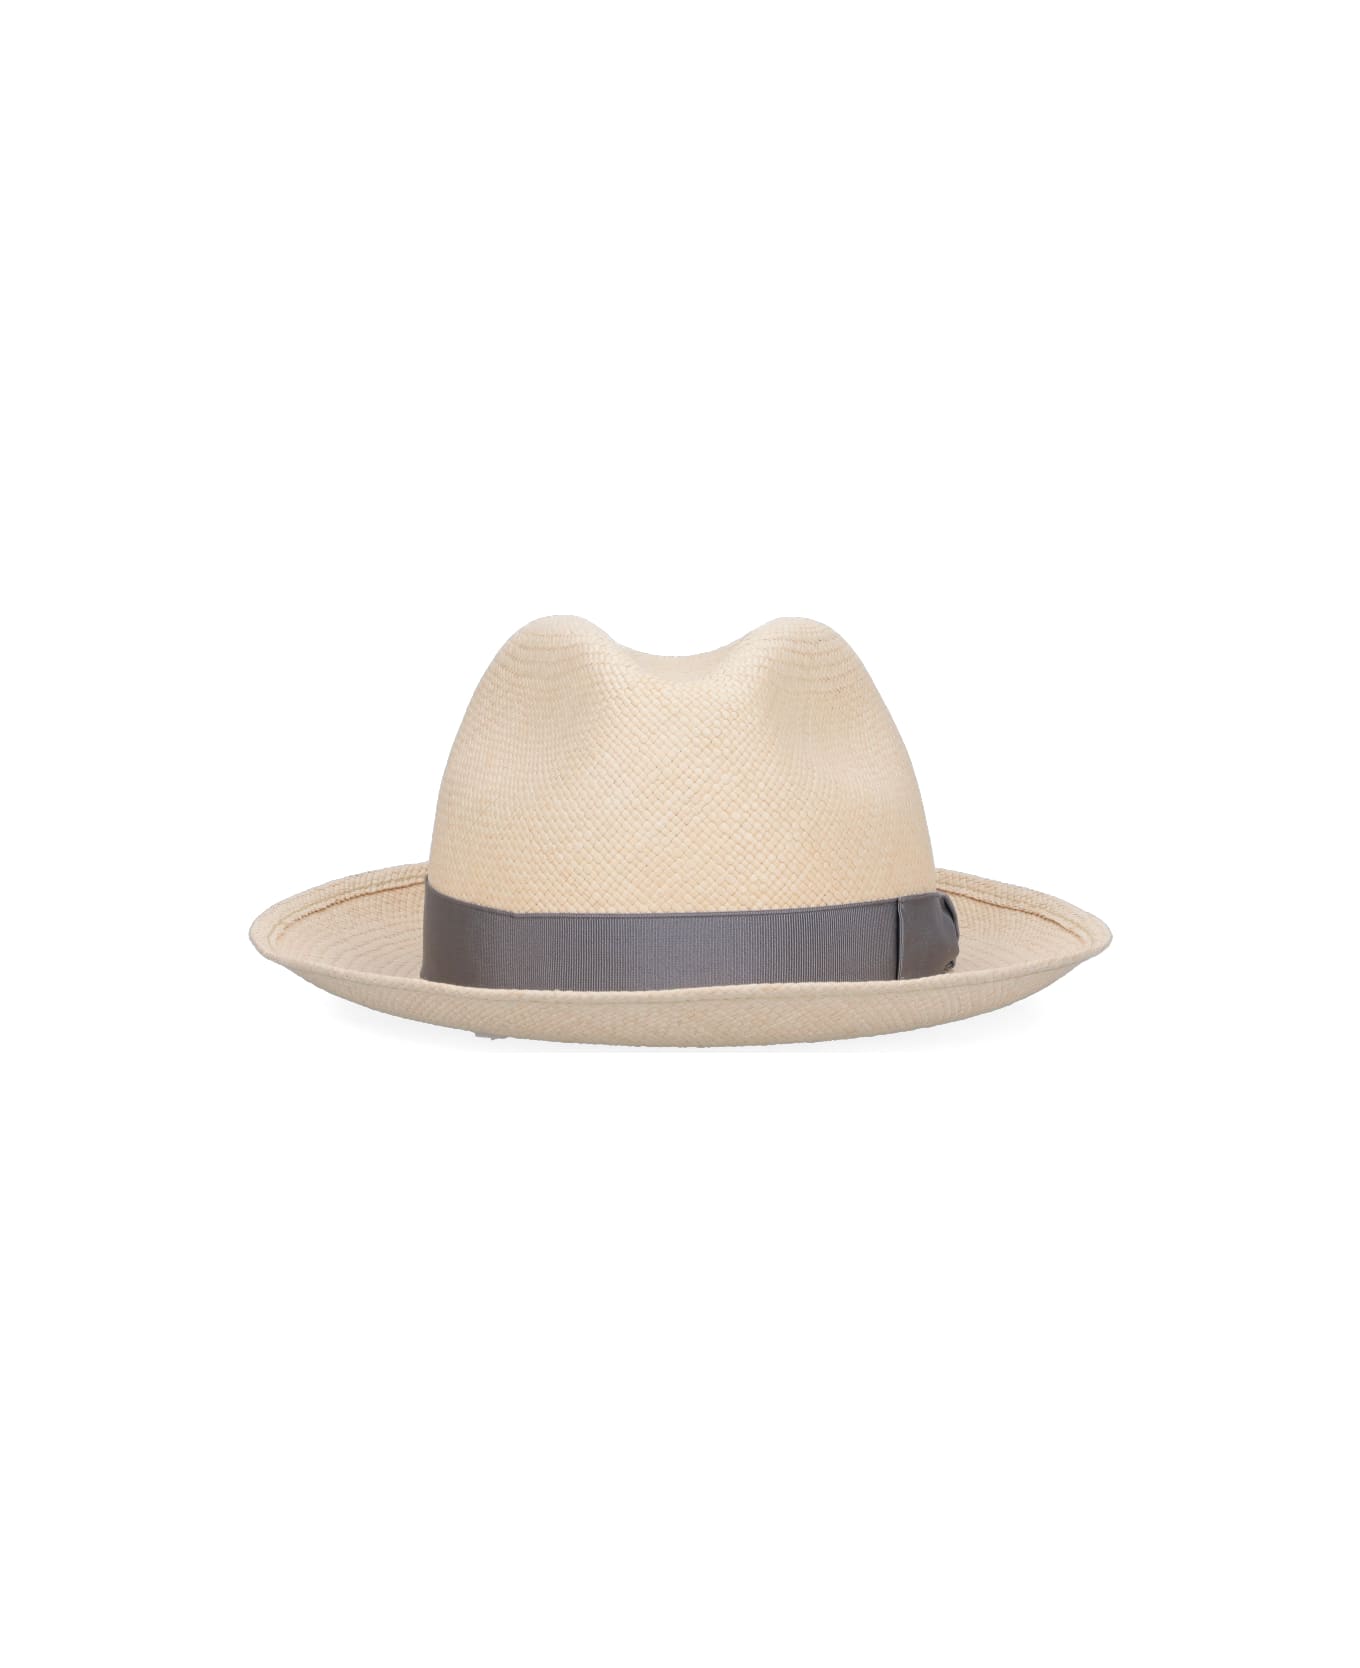 Borsalino 'panama' Hat - Beige 帽子